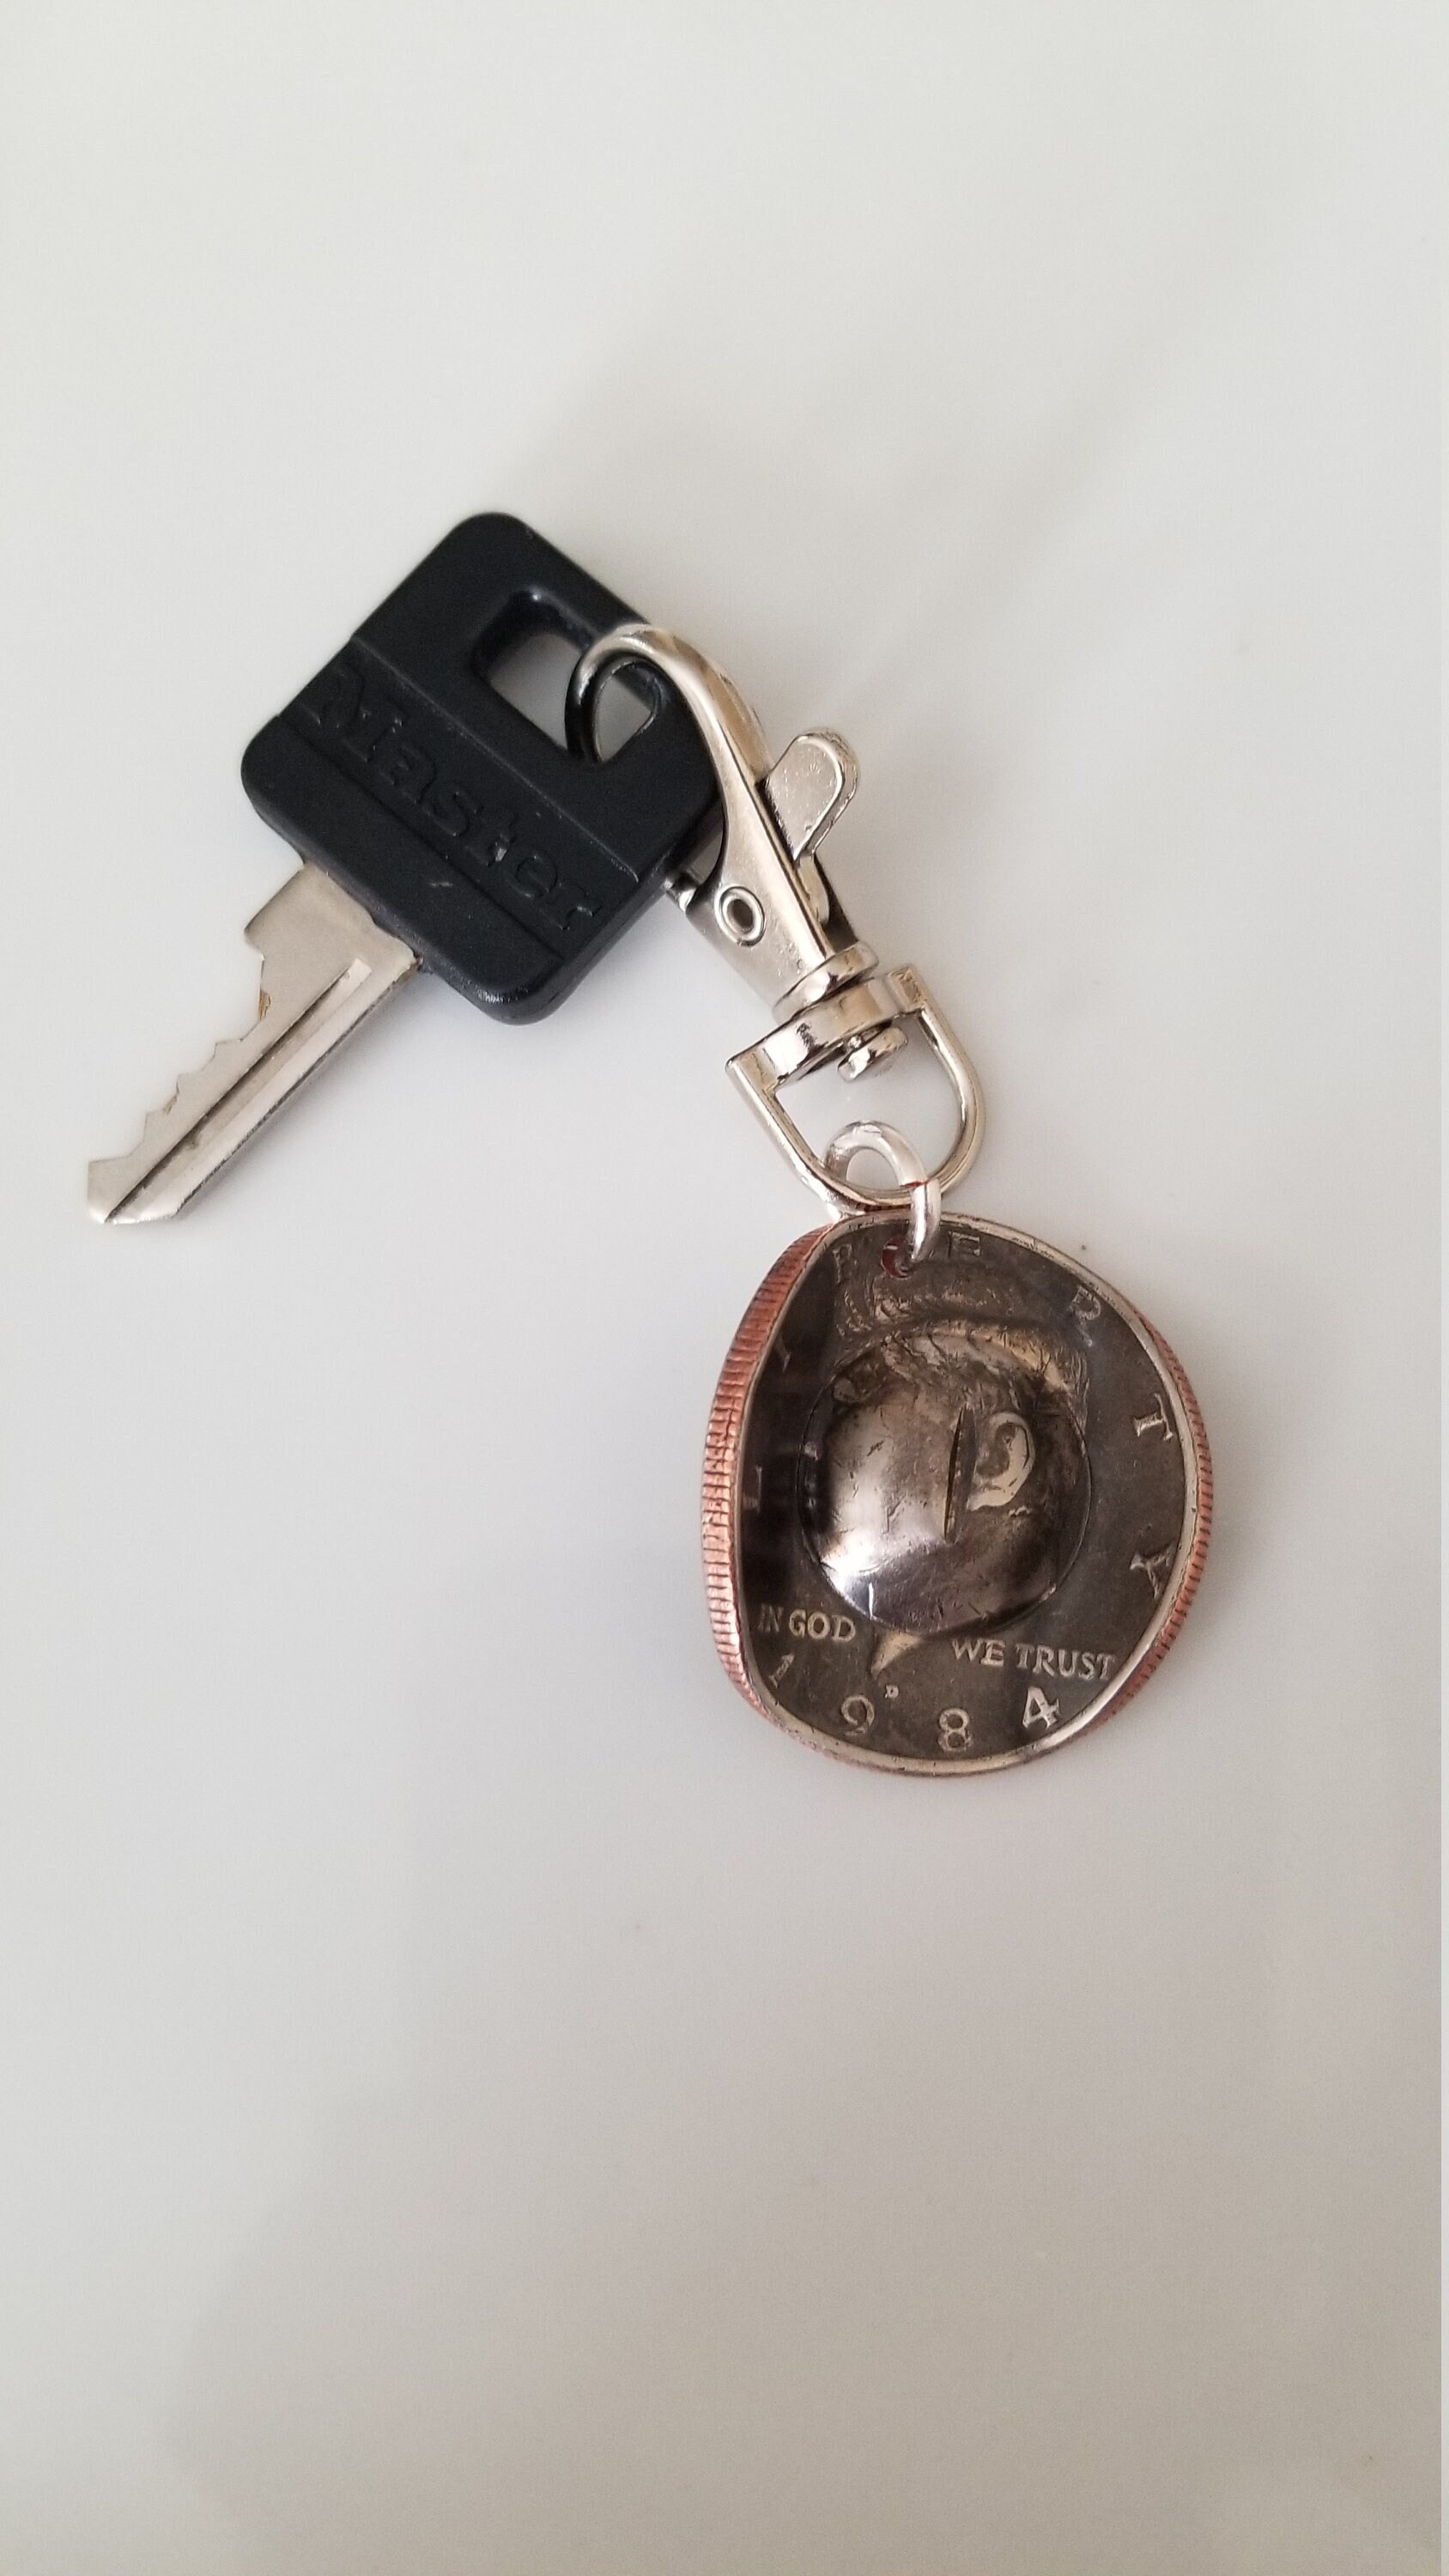 Kennedy Key Ring Zip Wallet - GAMEDAY